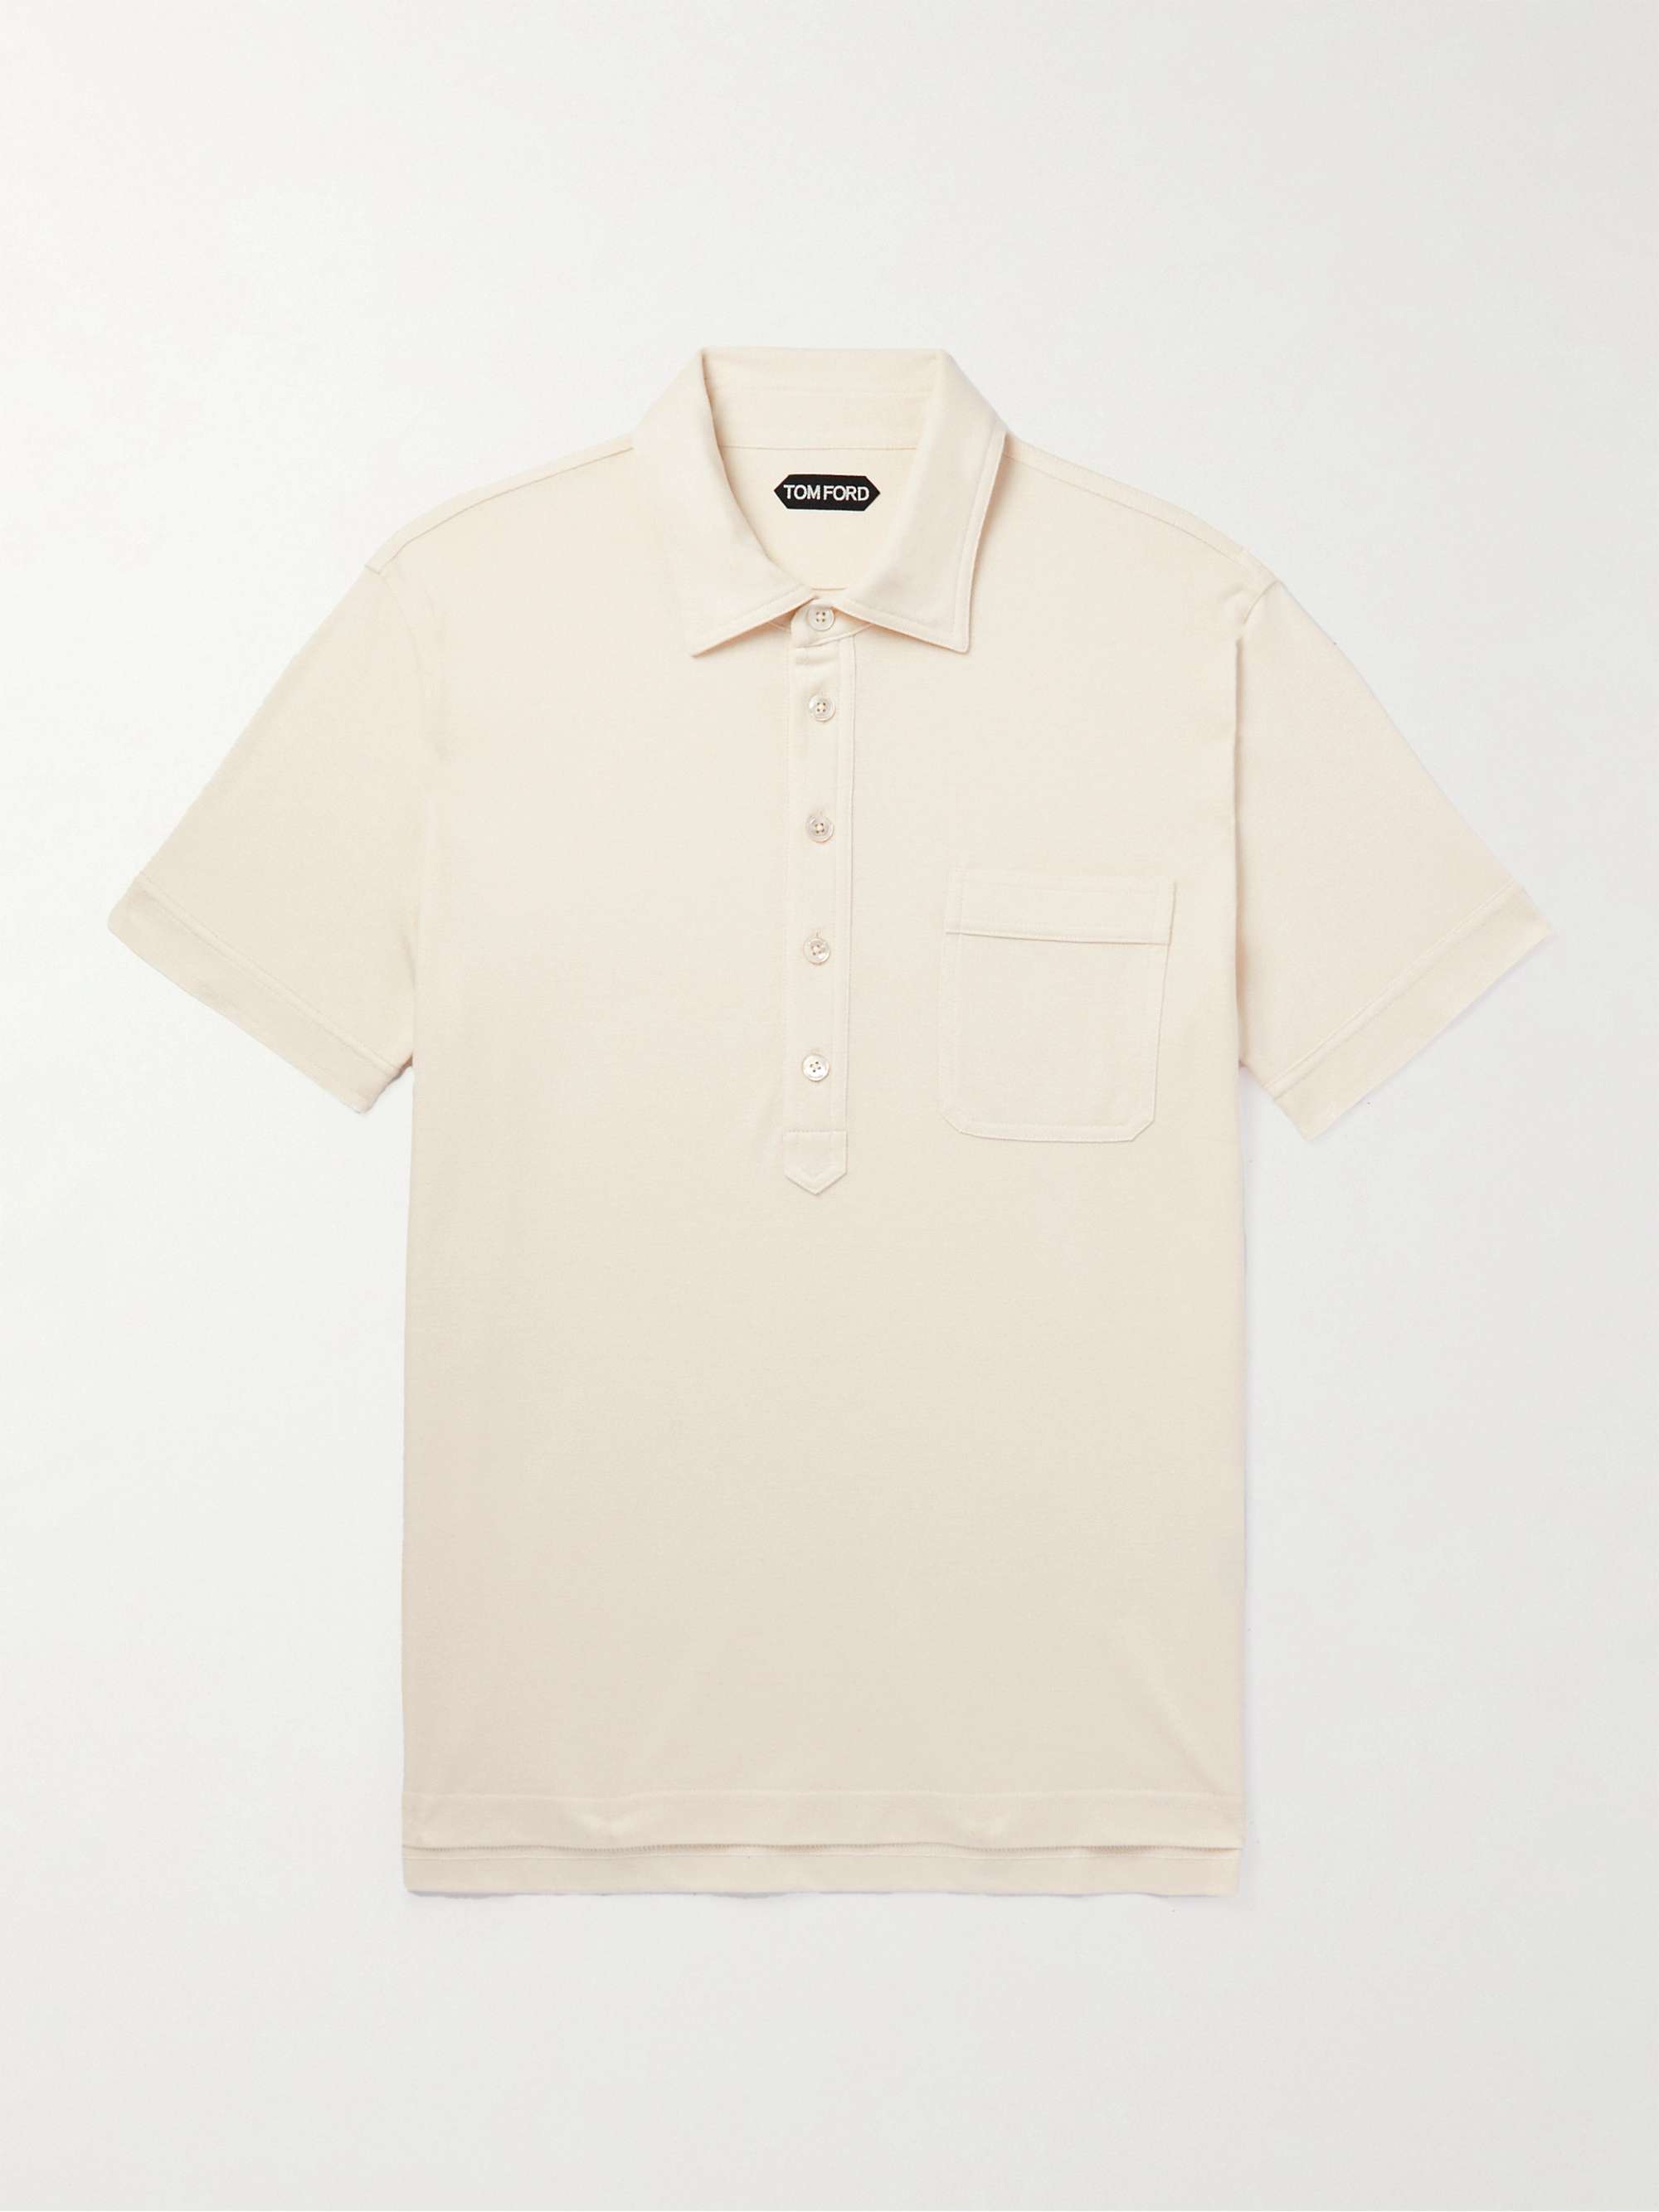 TOM FORD Cotton and Silk-Blend Pique Polo Shirt